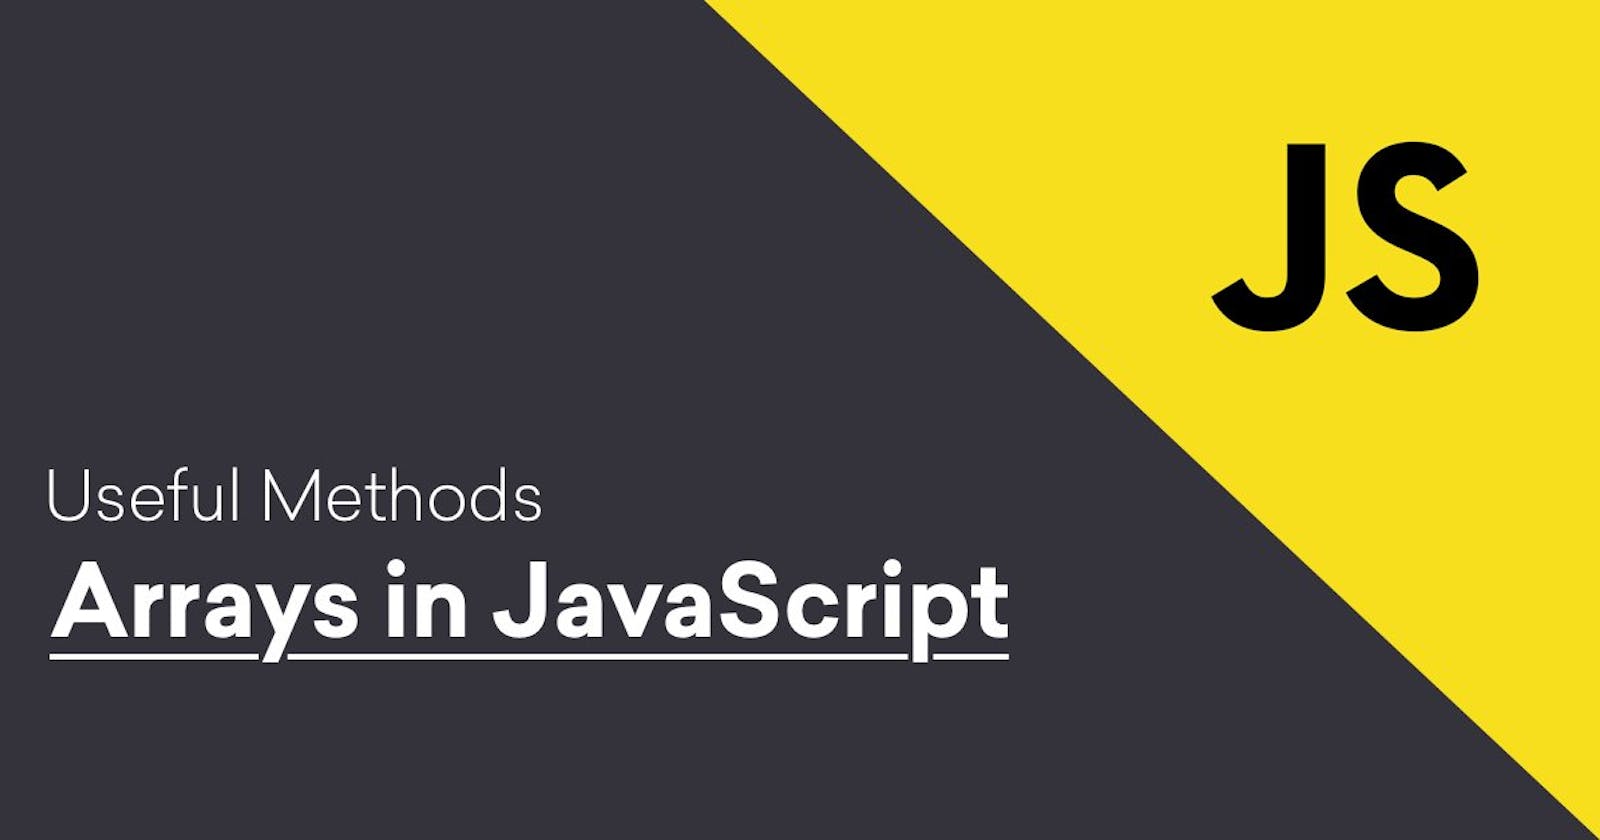 Useful methods in Arrays in Java Script